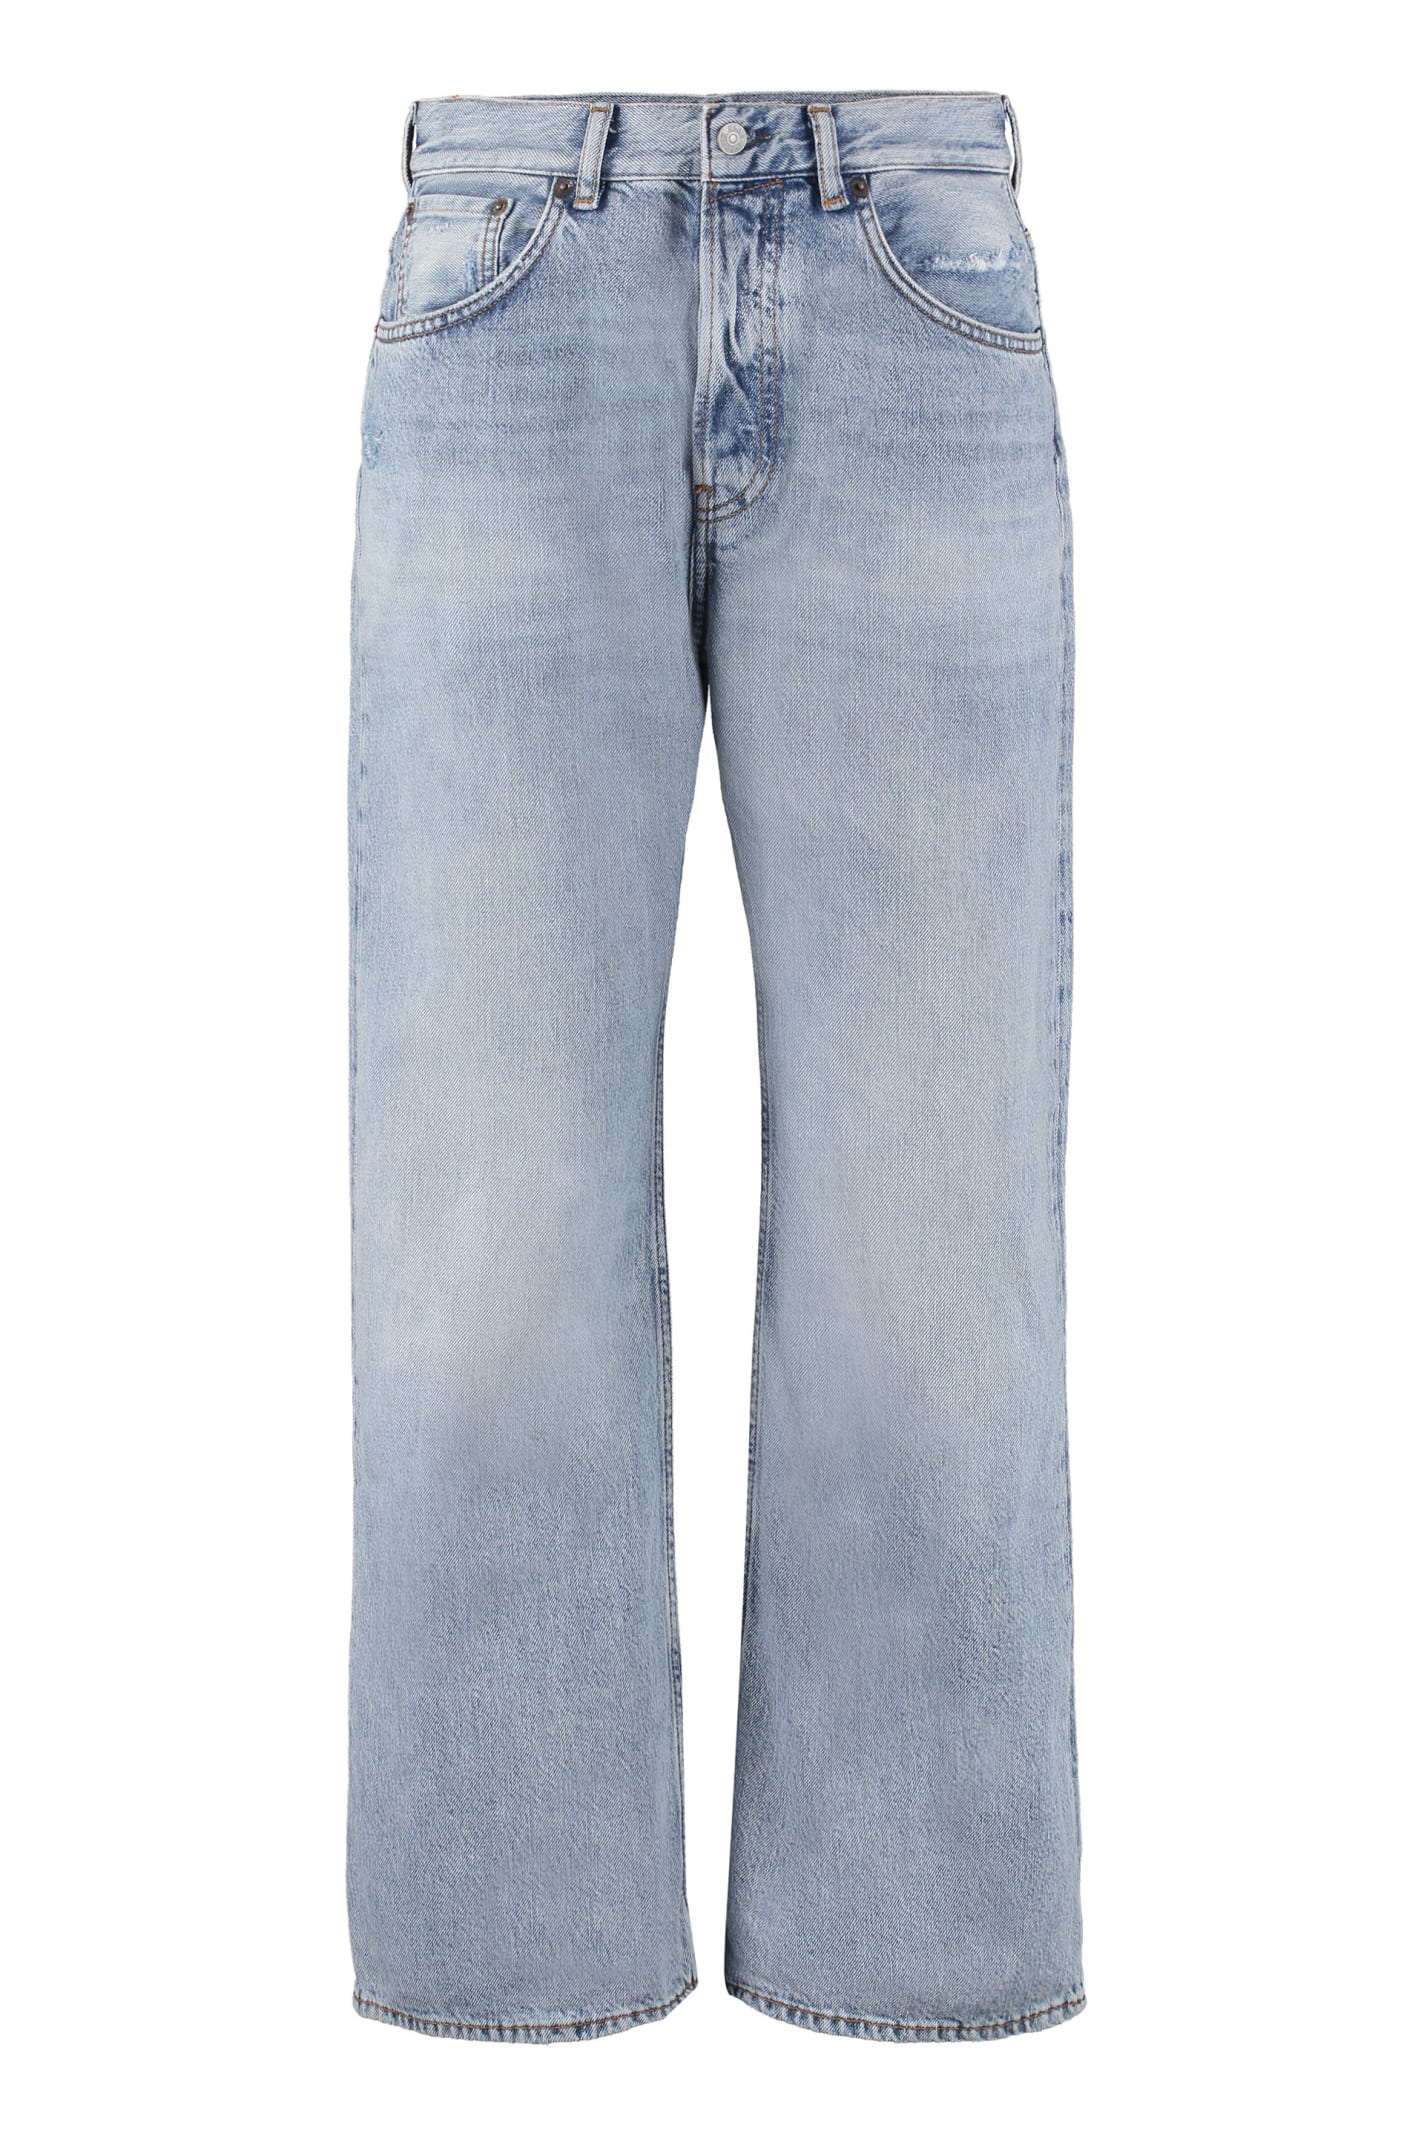 Acne Studios 5-pocket Jeans